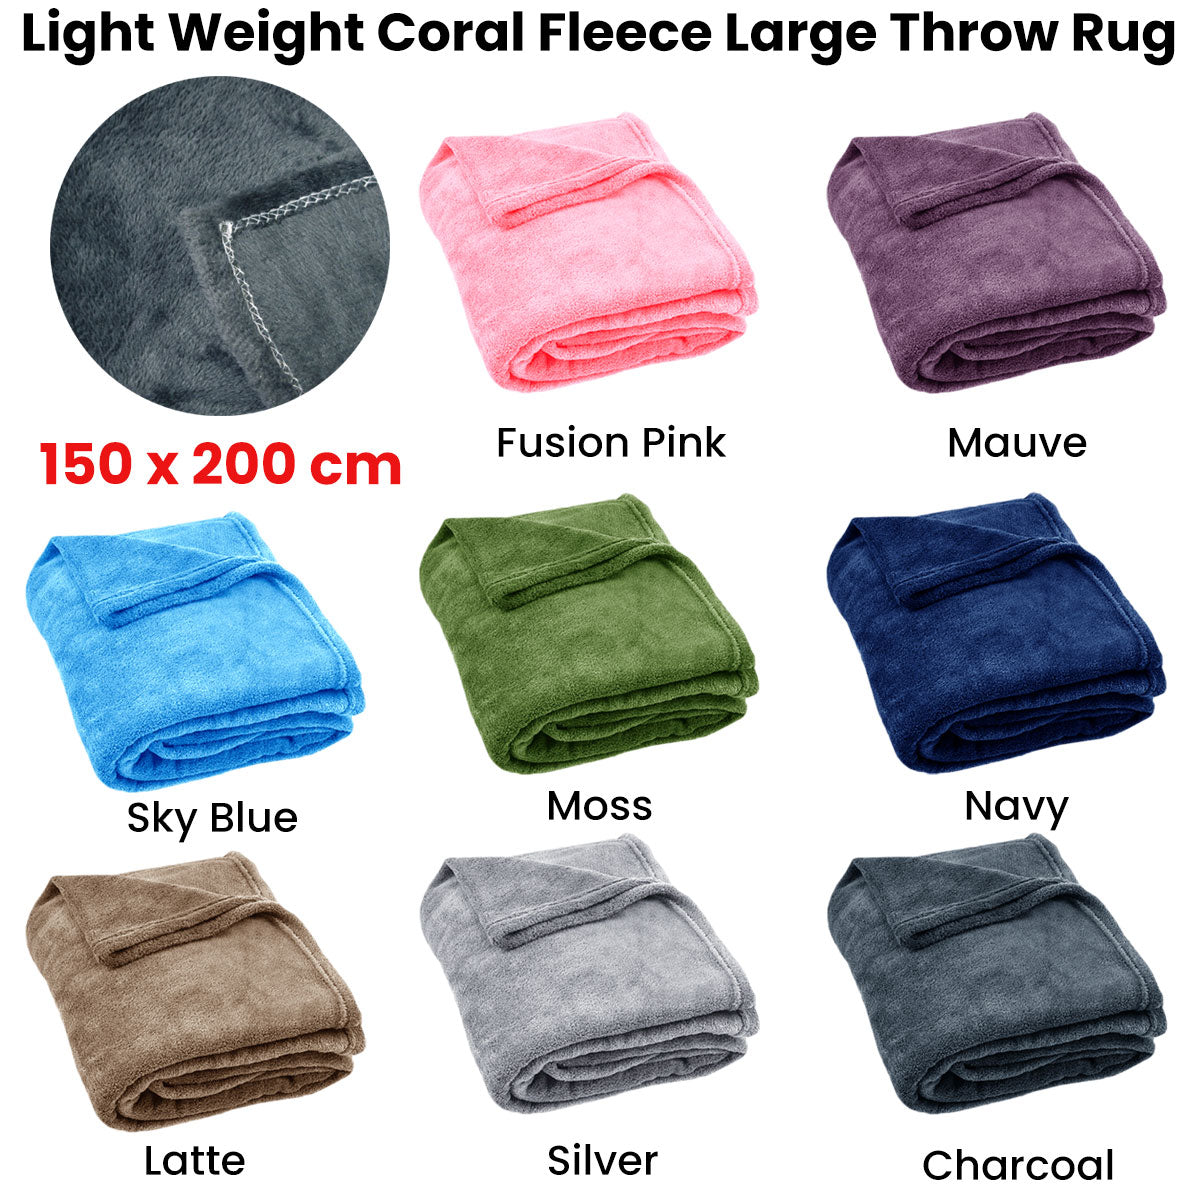 Light Weight Coral Fleece Throw Rug 150x200 cm Fusion Pink